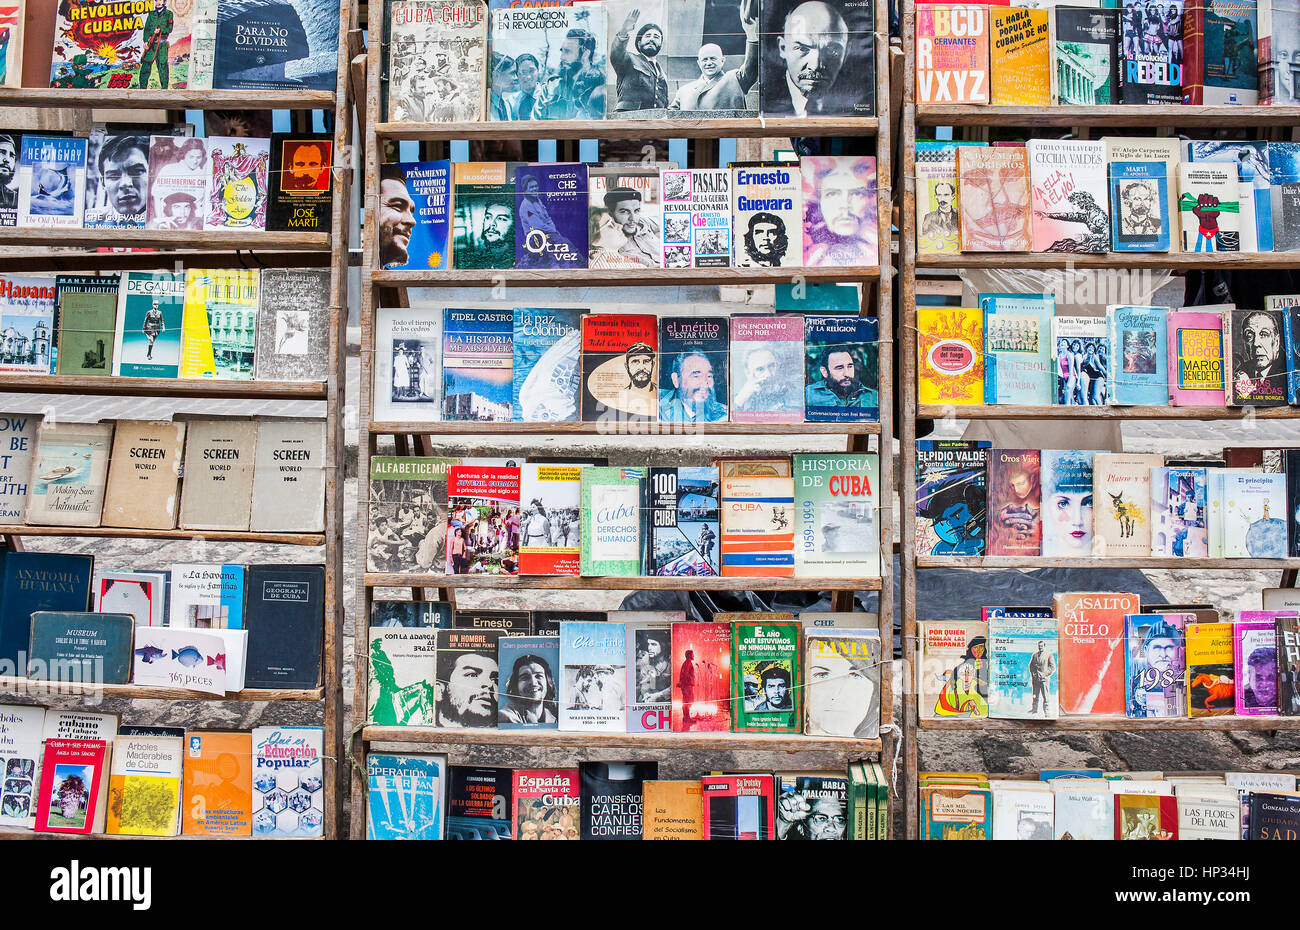 A book stall in Plaza de Armas,selling literature about the Cuban Revolution, Old Havana, Habana Vieja, La Habana, Cuba Stock Photo